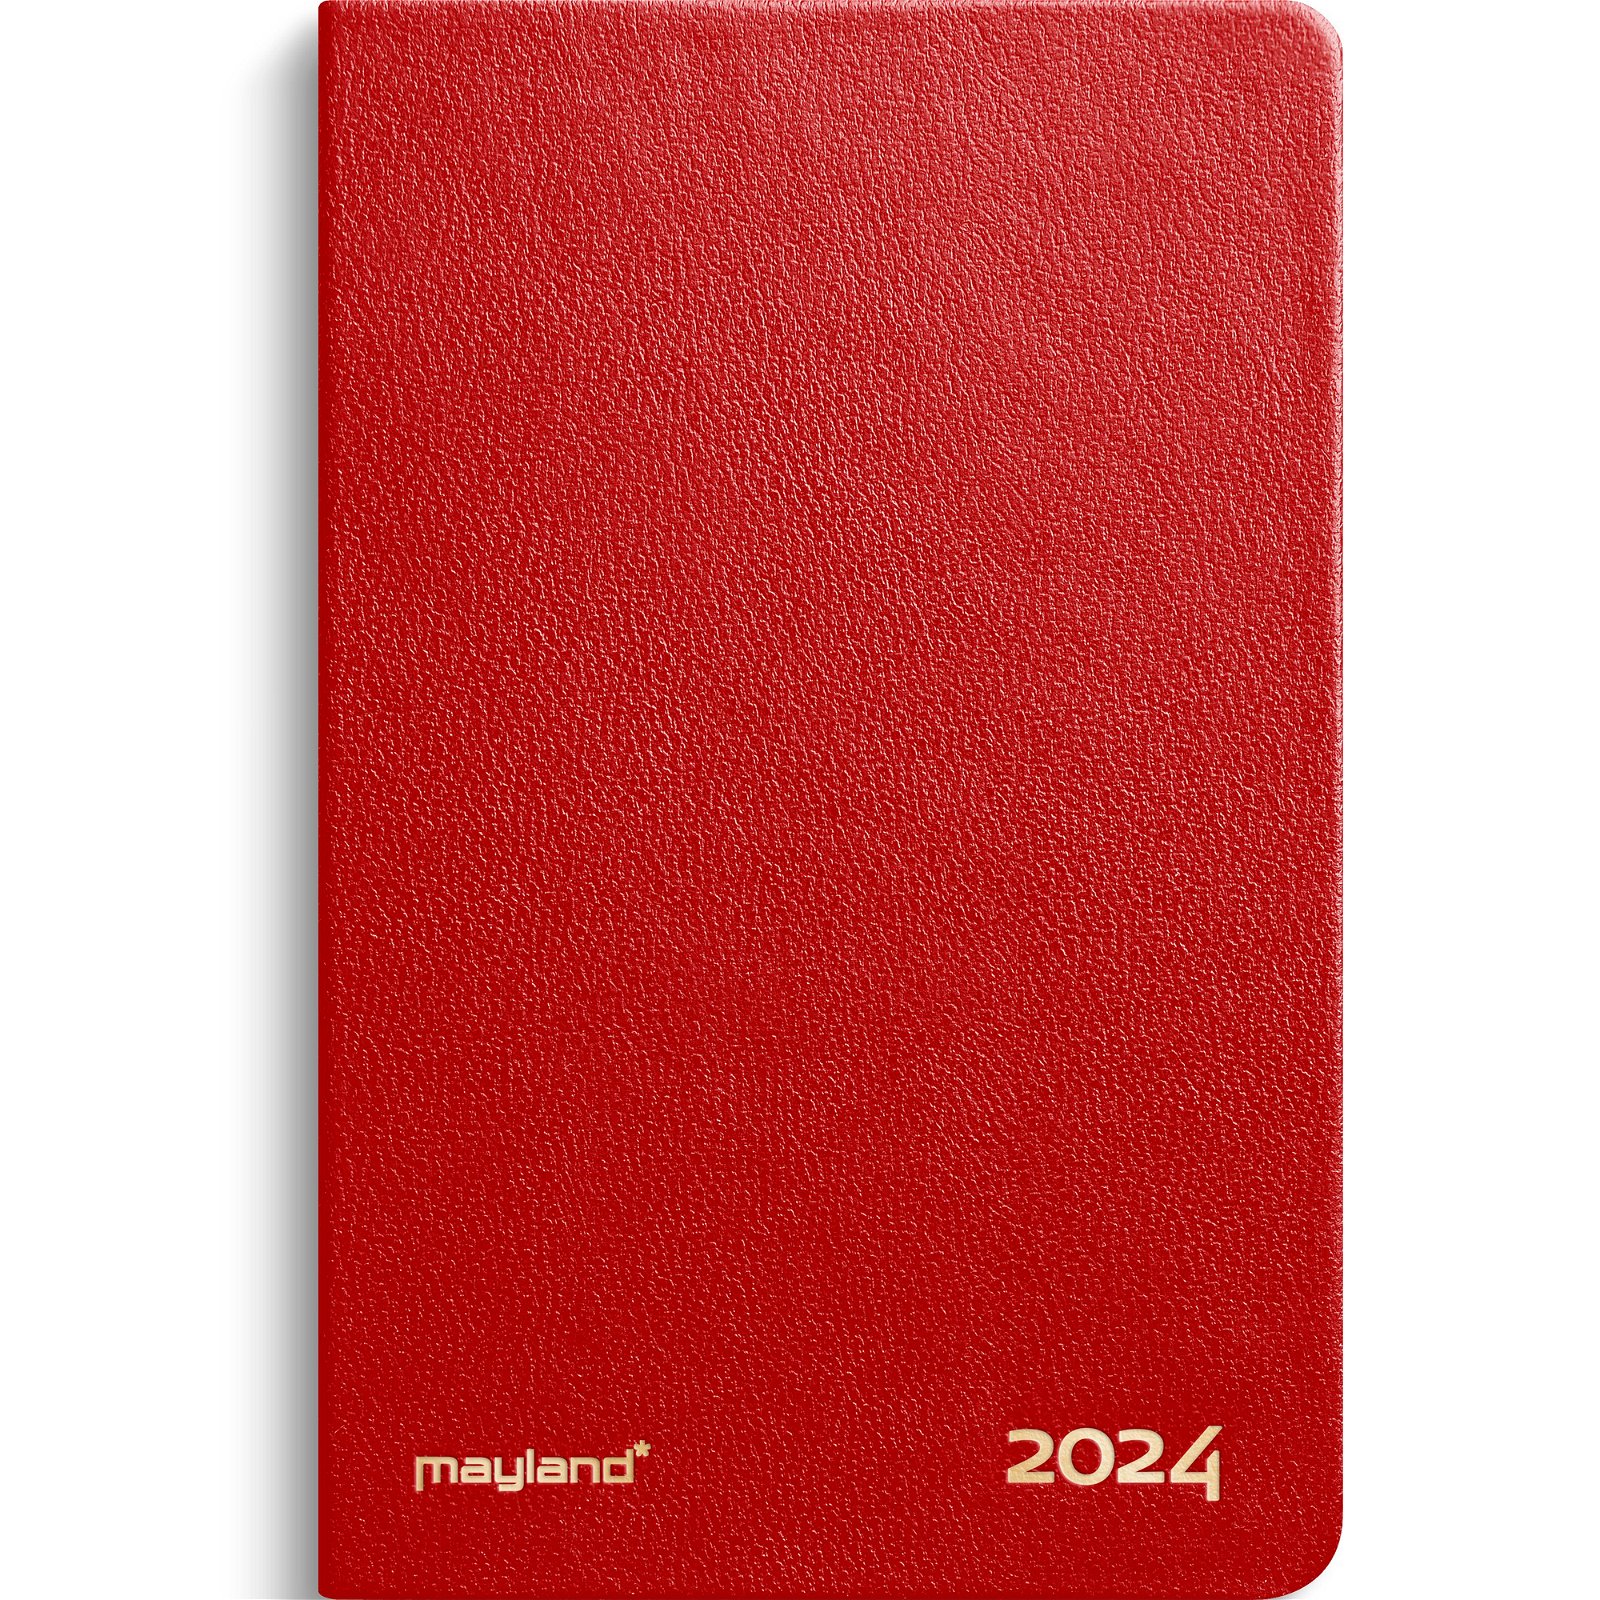 Mayland 2024 24162030 lommekalender 12x7,5cm rød